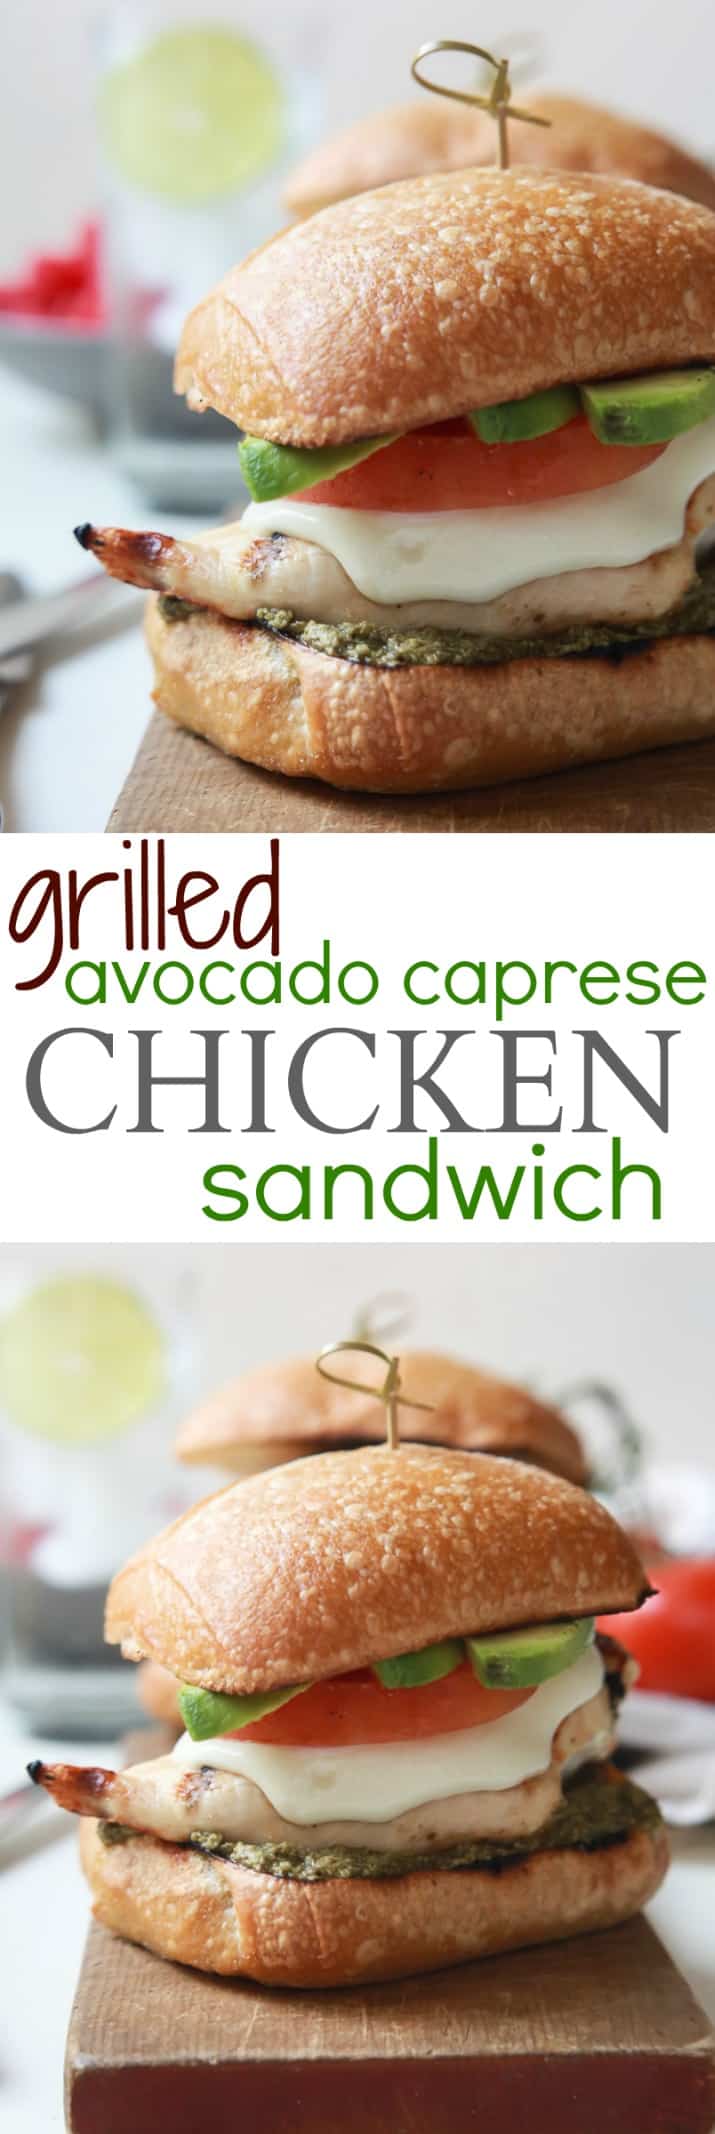 Recipe collage for Grilled Avocado Caprese Chicken Sandwich